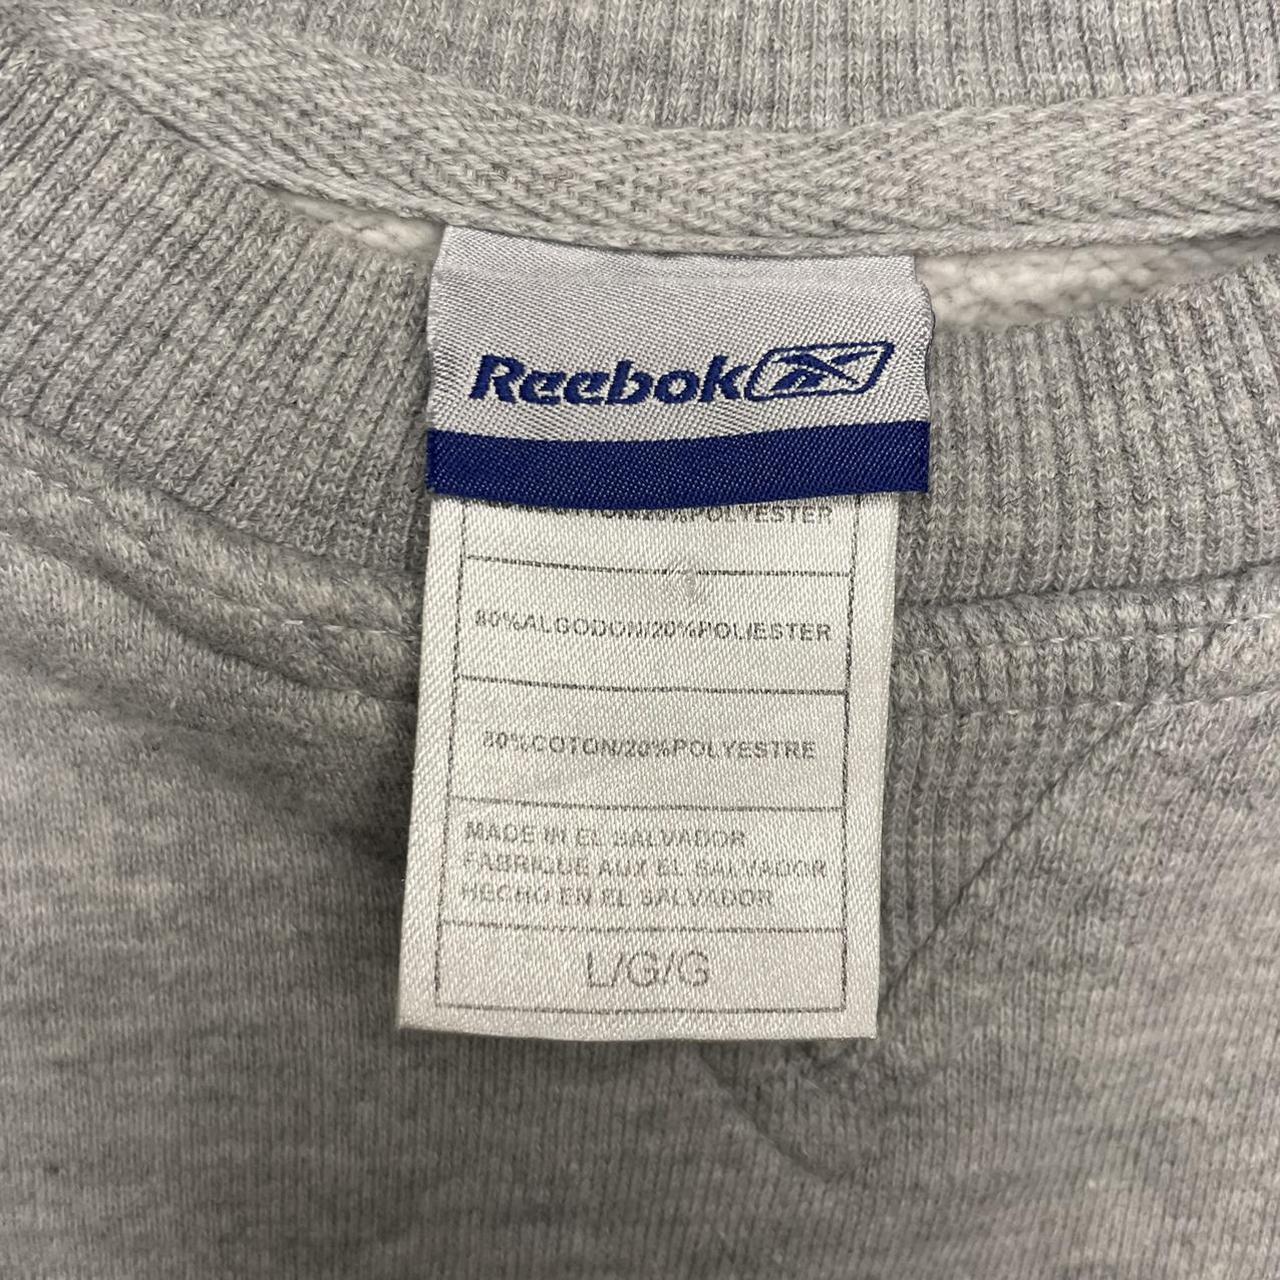 Reebok Women's Grey and Navy Sweatshirt (4)